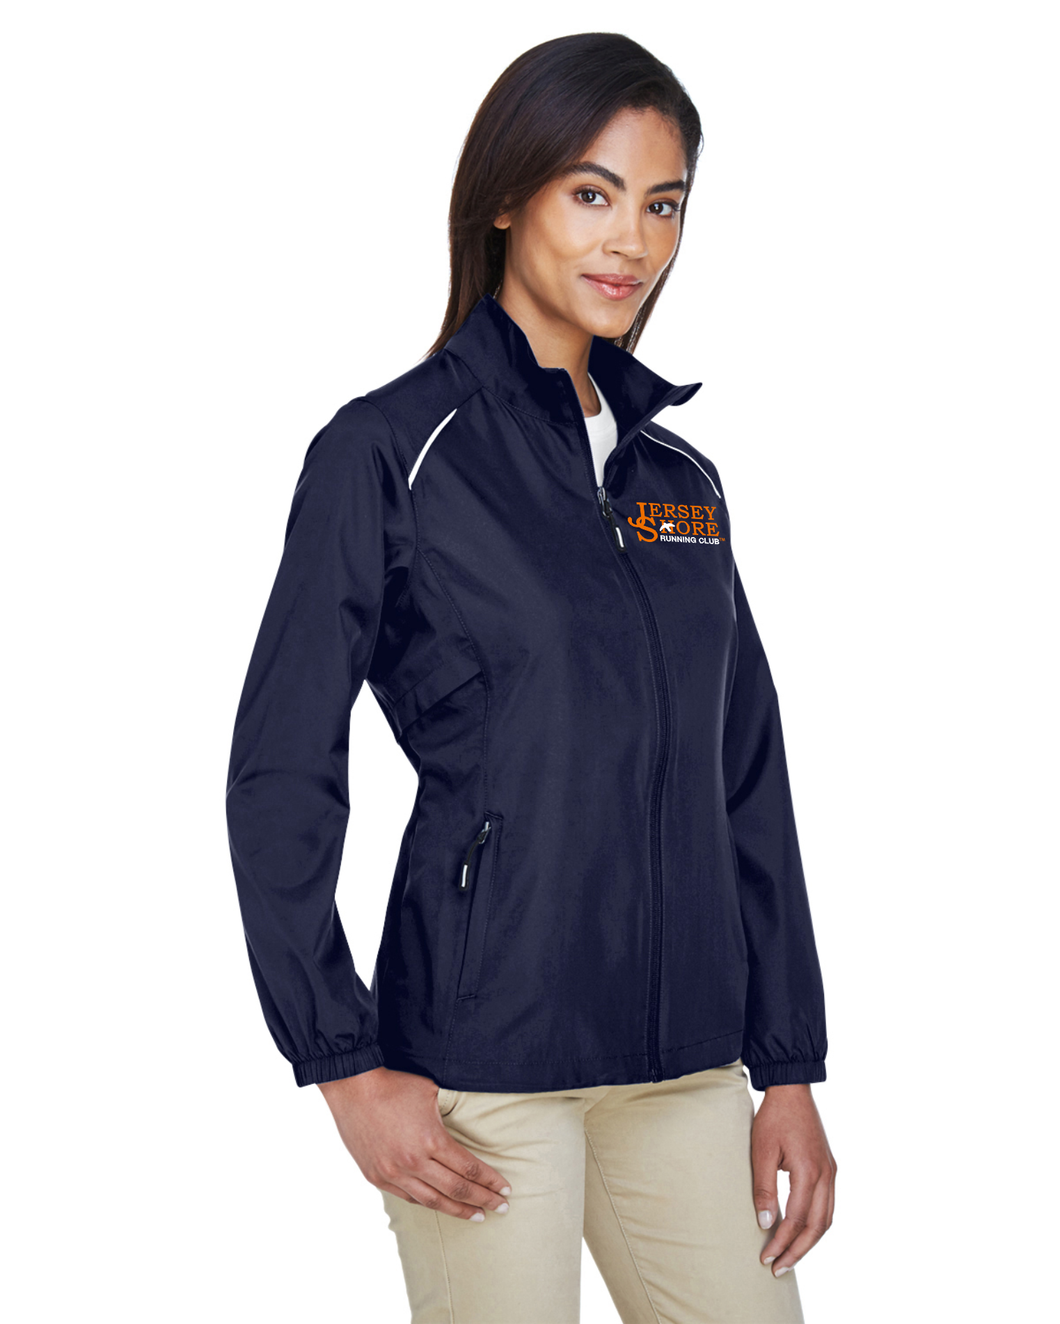 1f) JSRC   Core 365 Ladies' Motivate Unlined Lightweight Jacket 78183